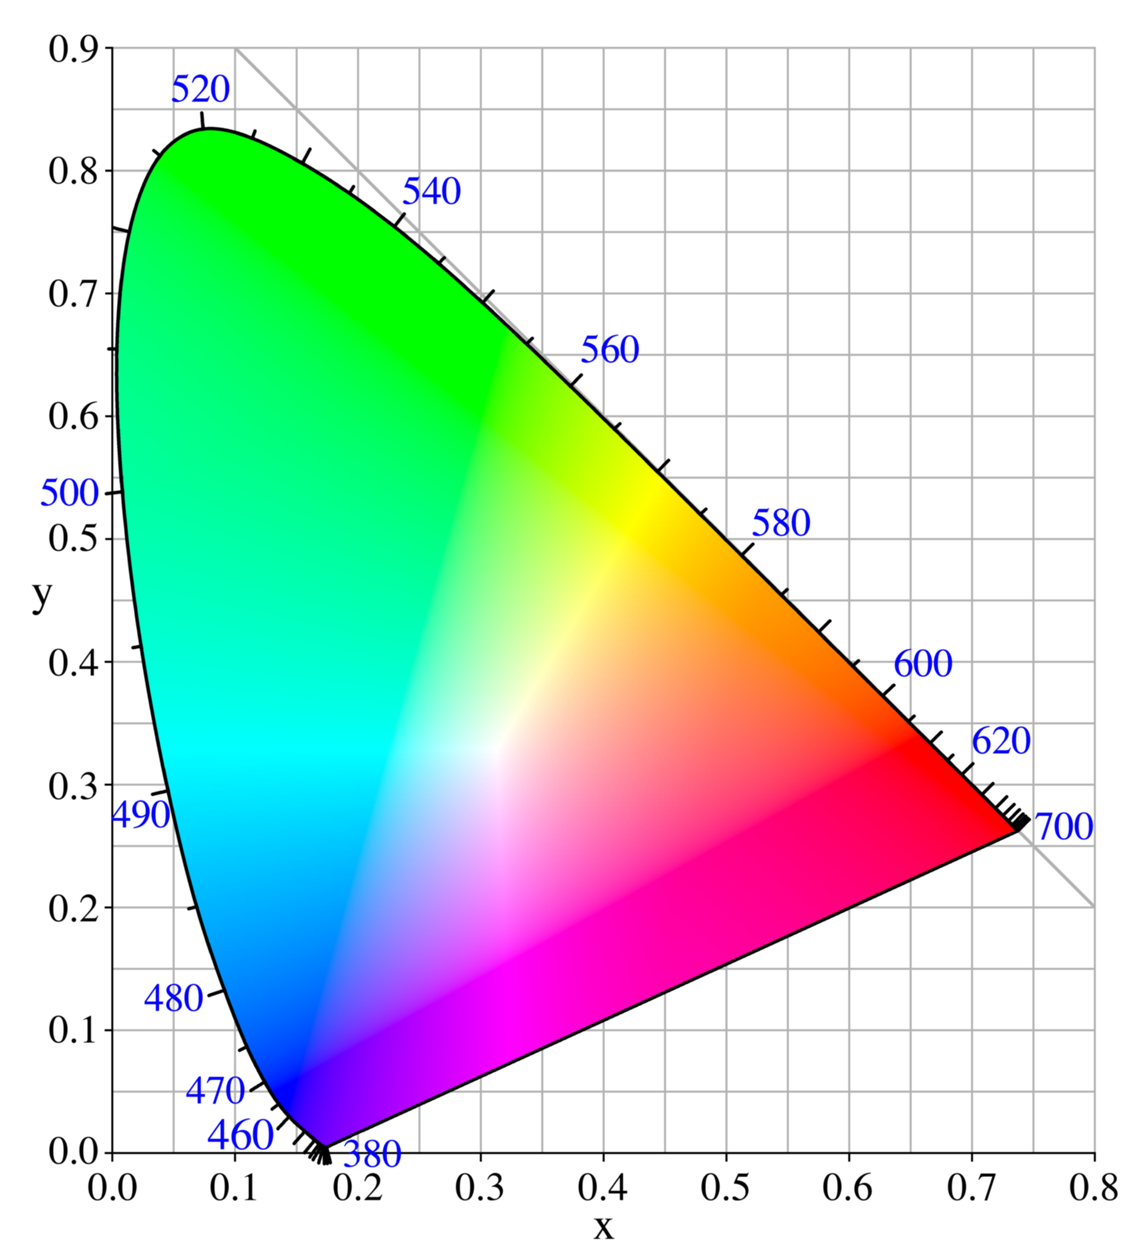 CIE1931 color space chromaticity diagram